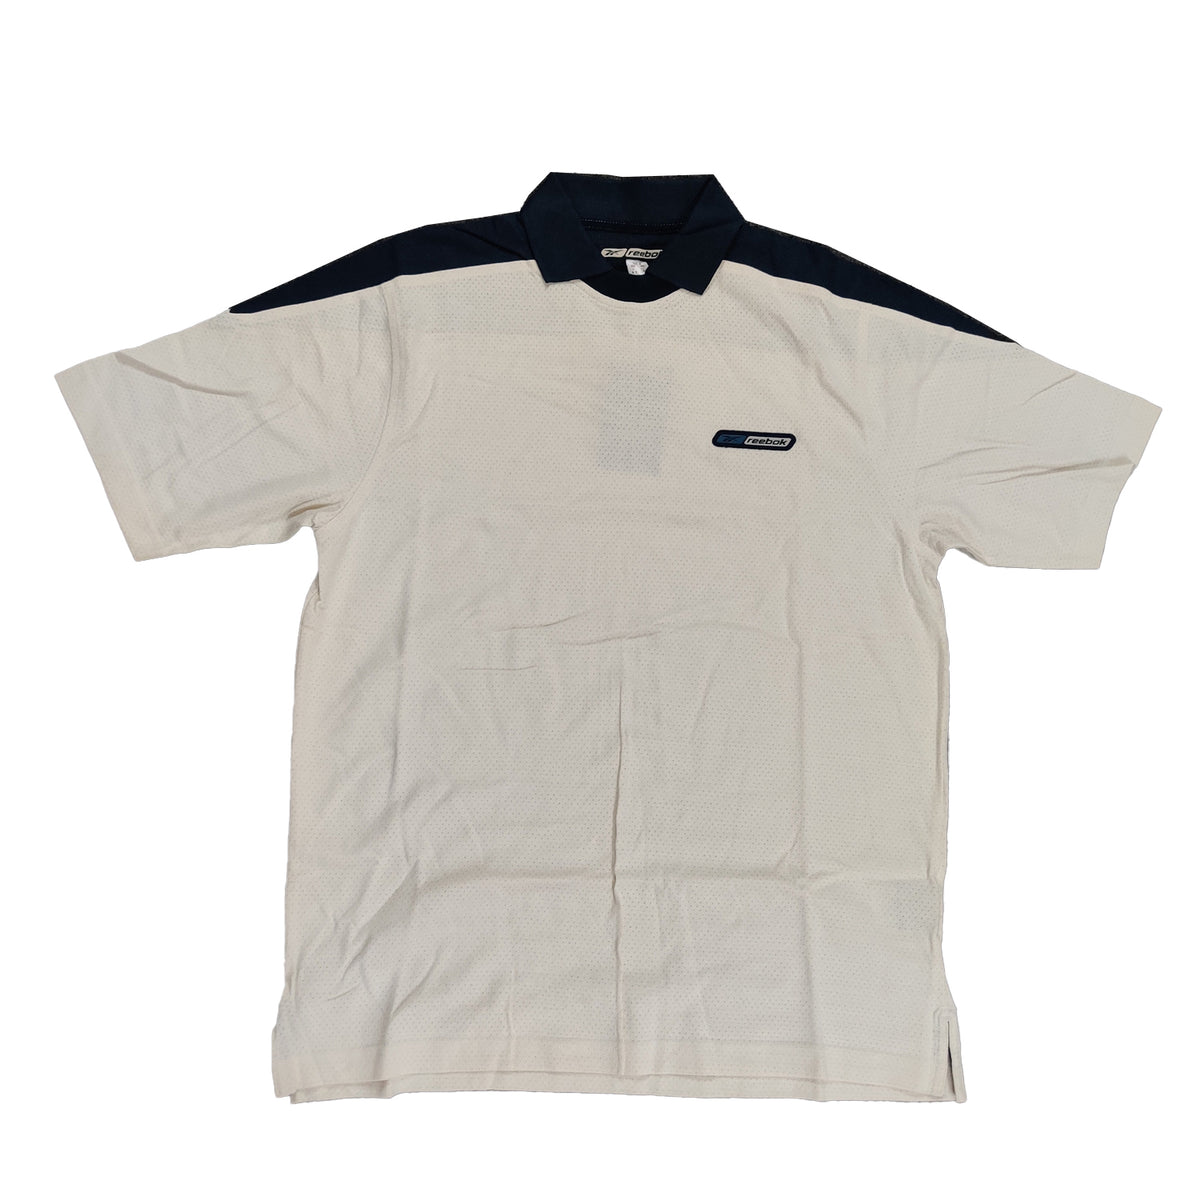 Reebok Mens Clearance Contrast Collar T-Shirt - Medium